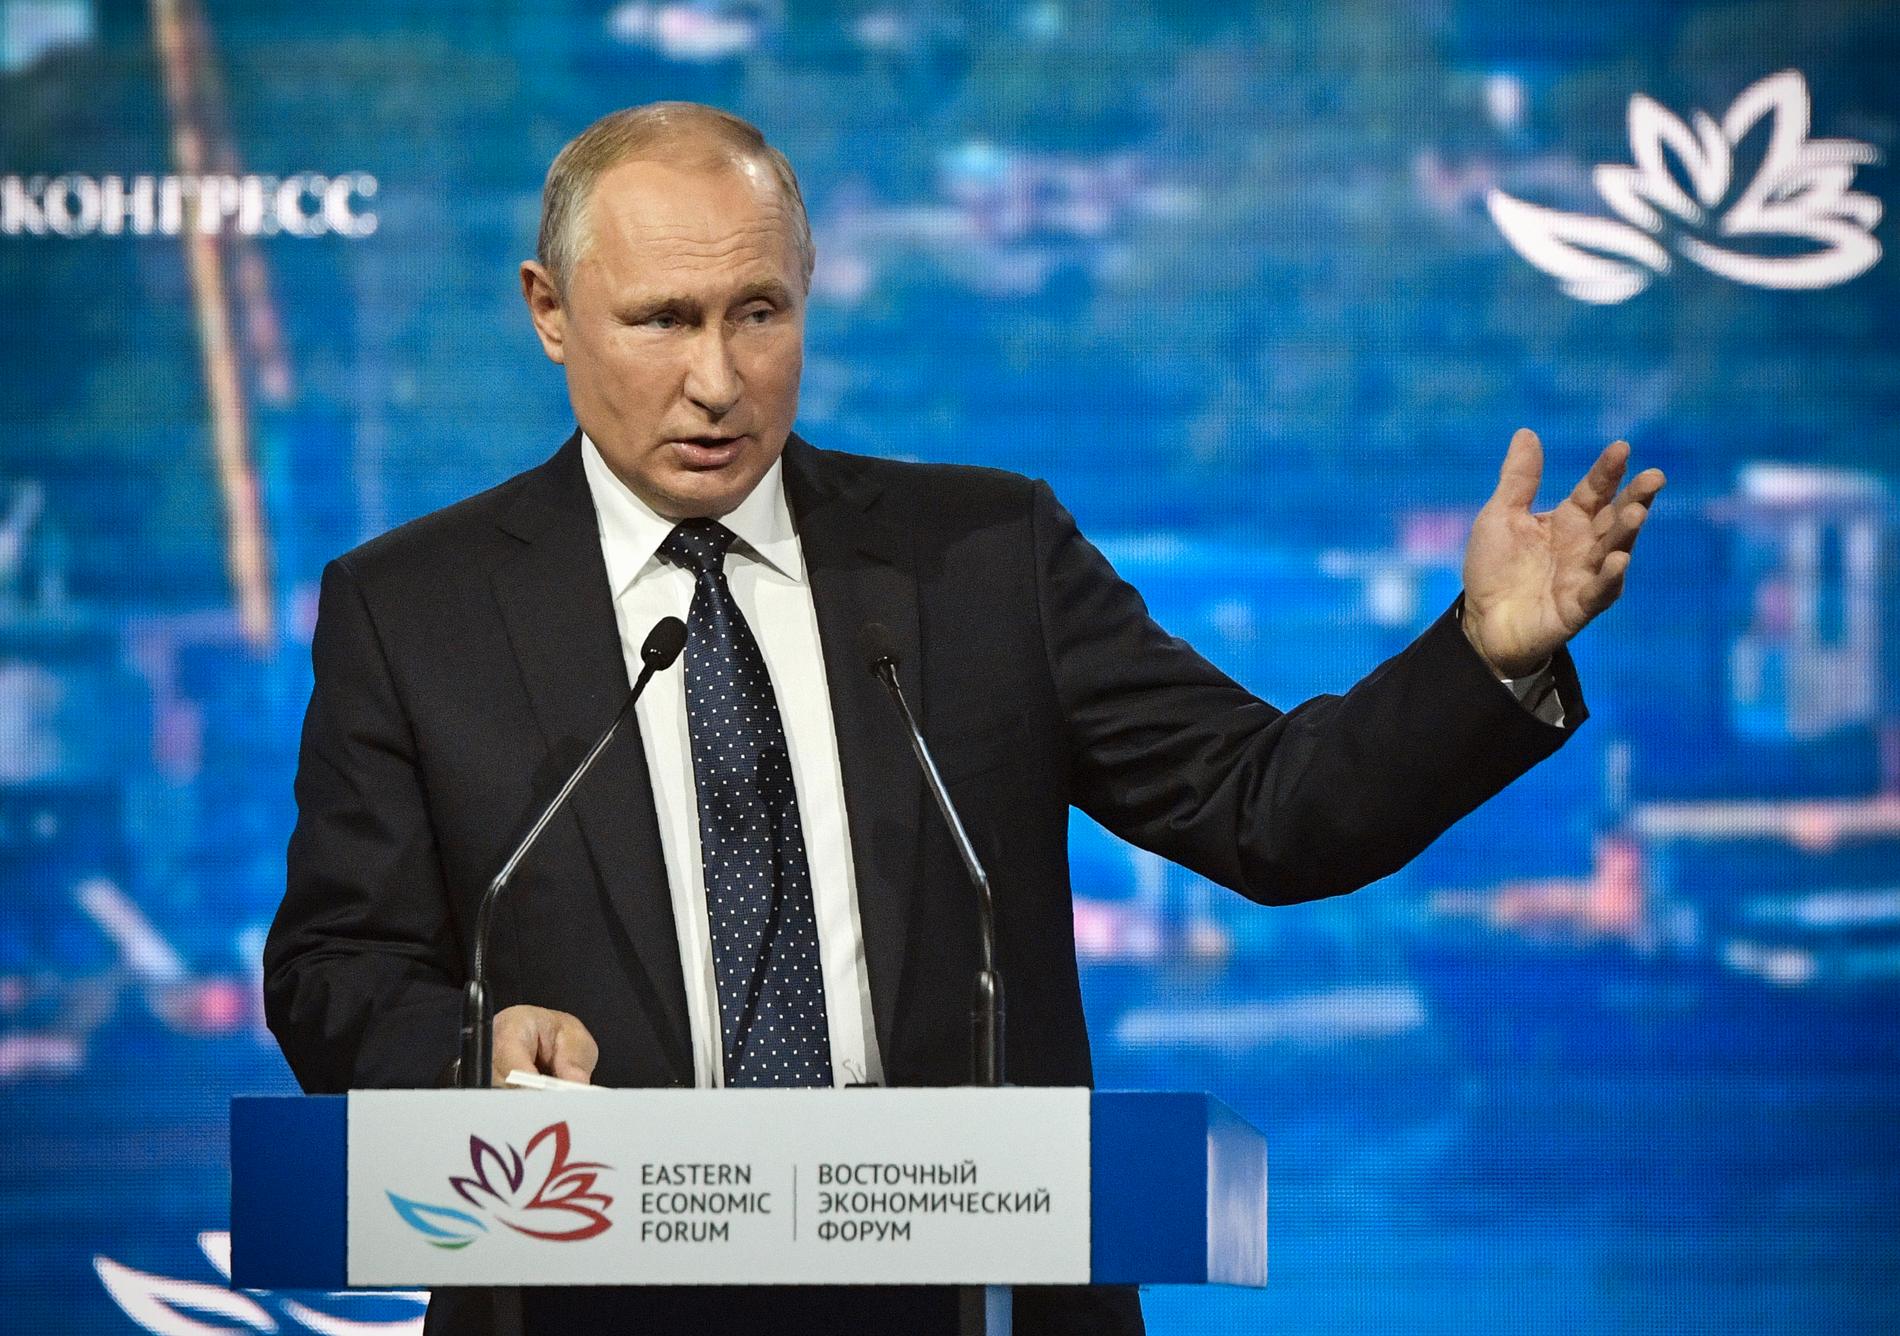 Rysslands president Vladimir Putin vid det ekonomiska forumet i Vladivostok.